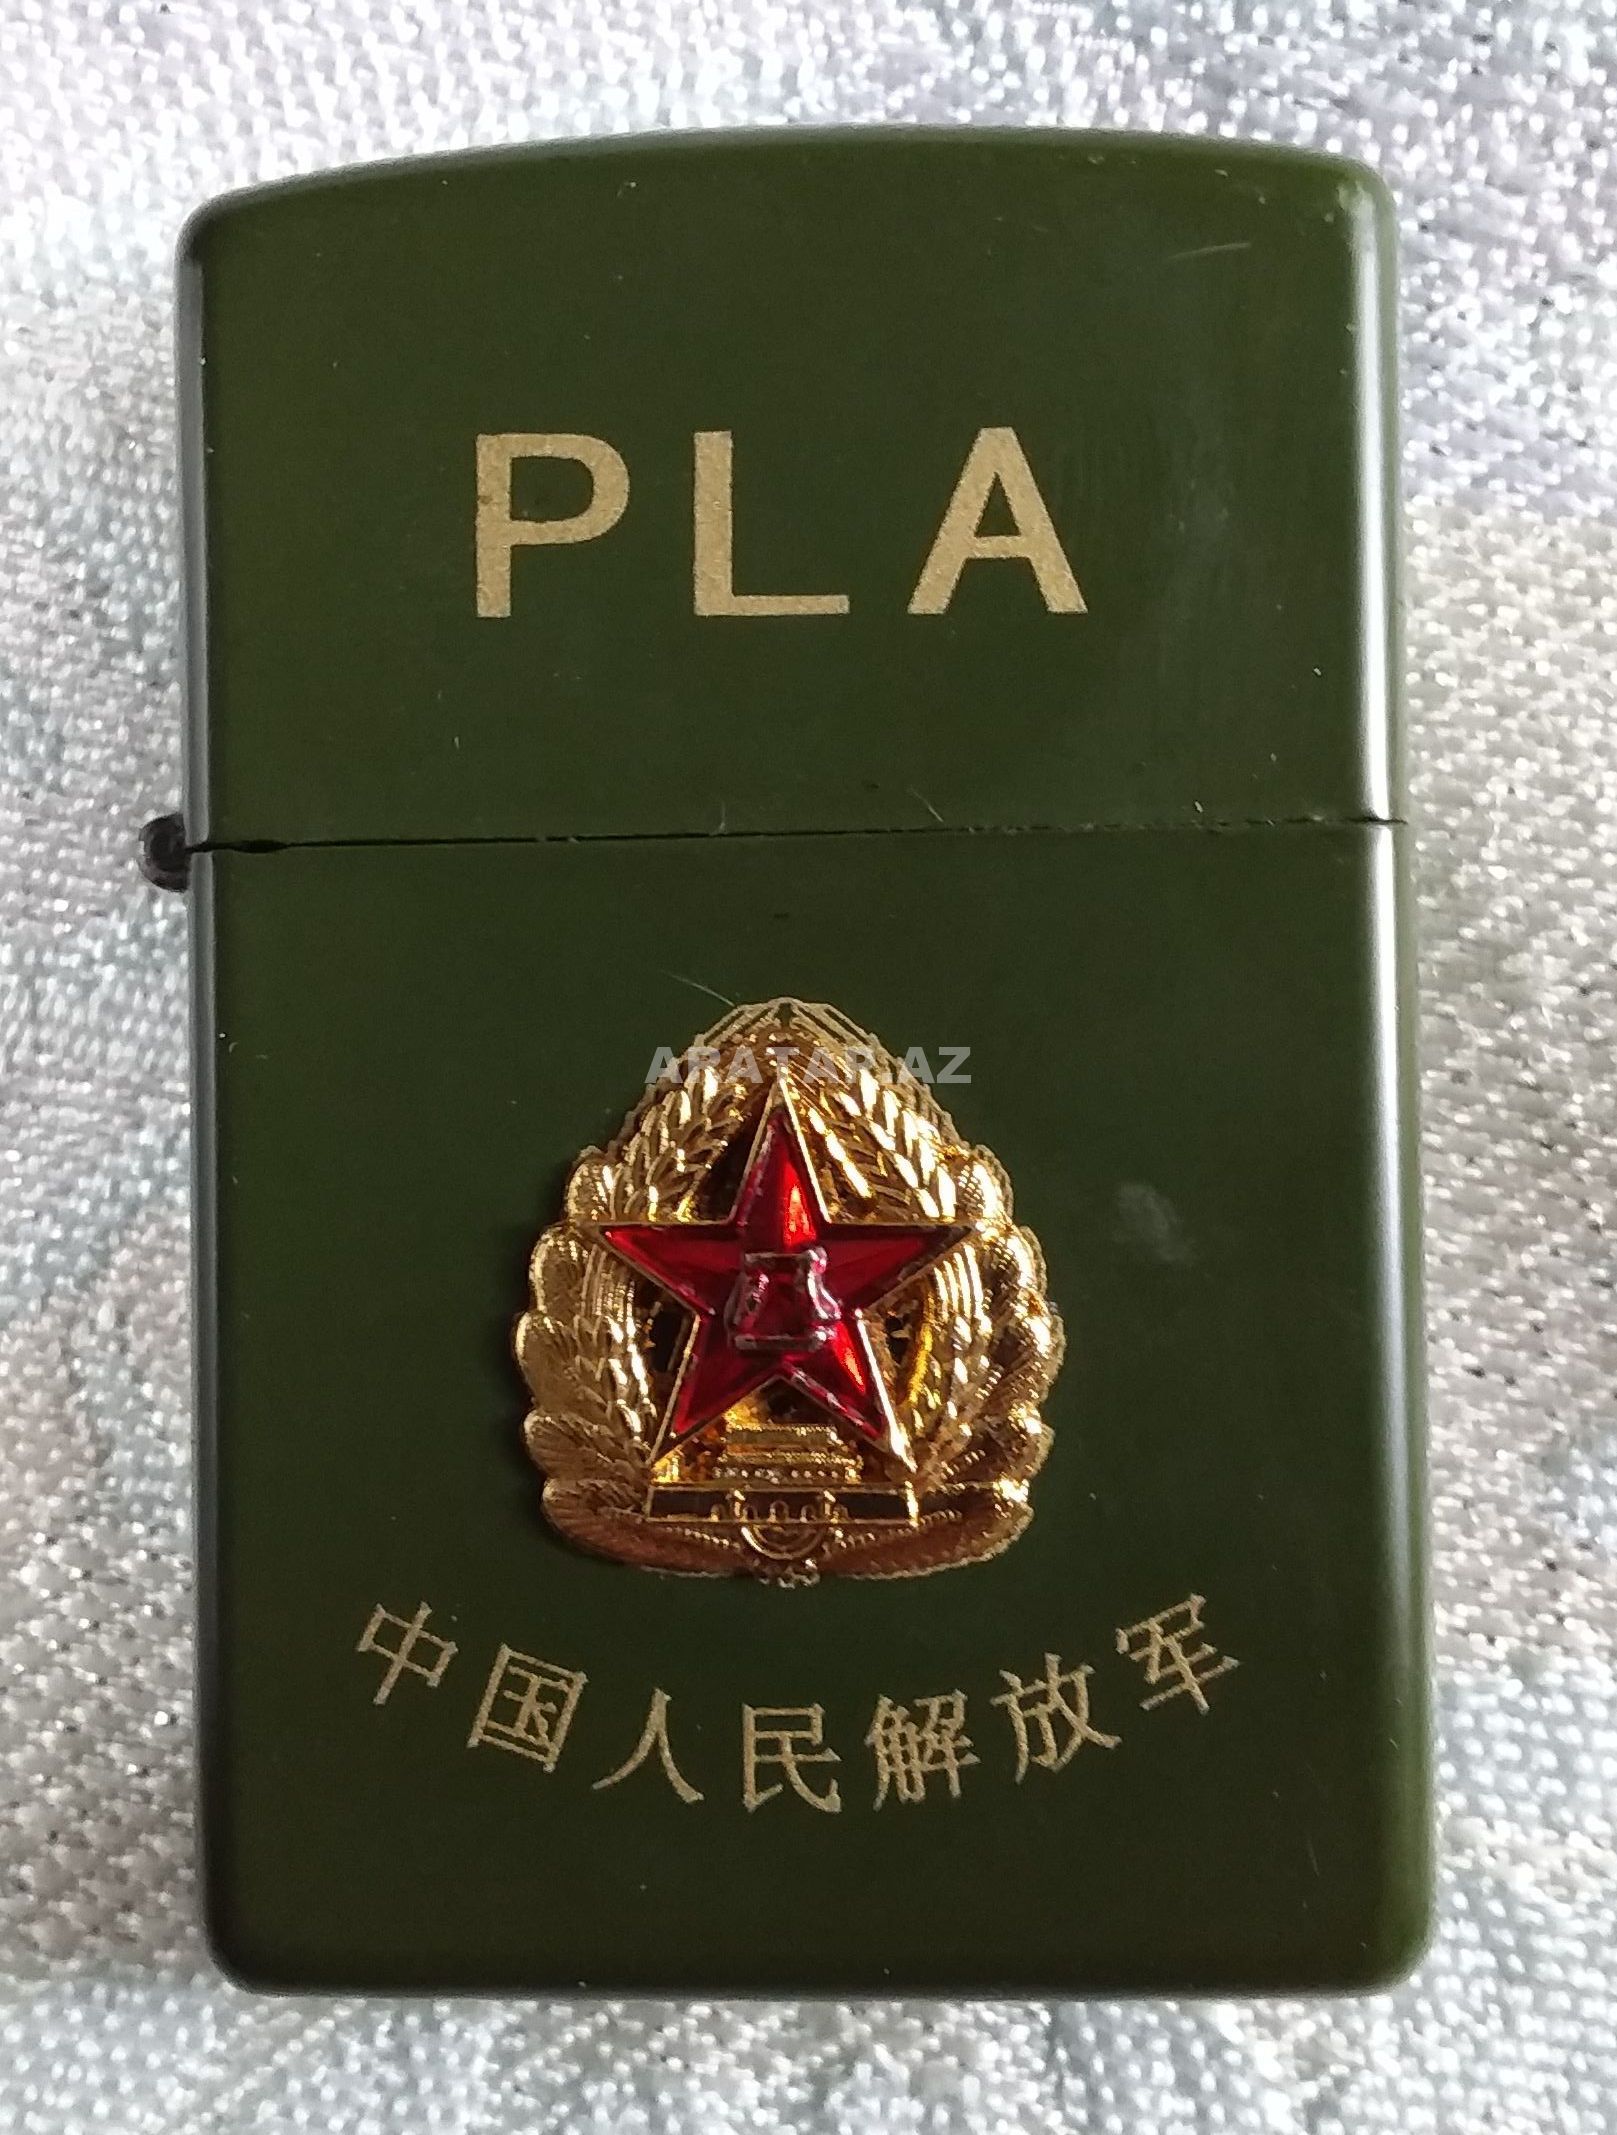 Армейская зажигалка "PLA"